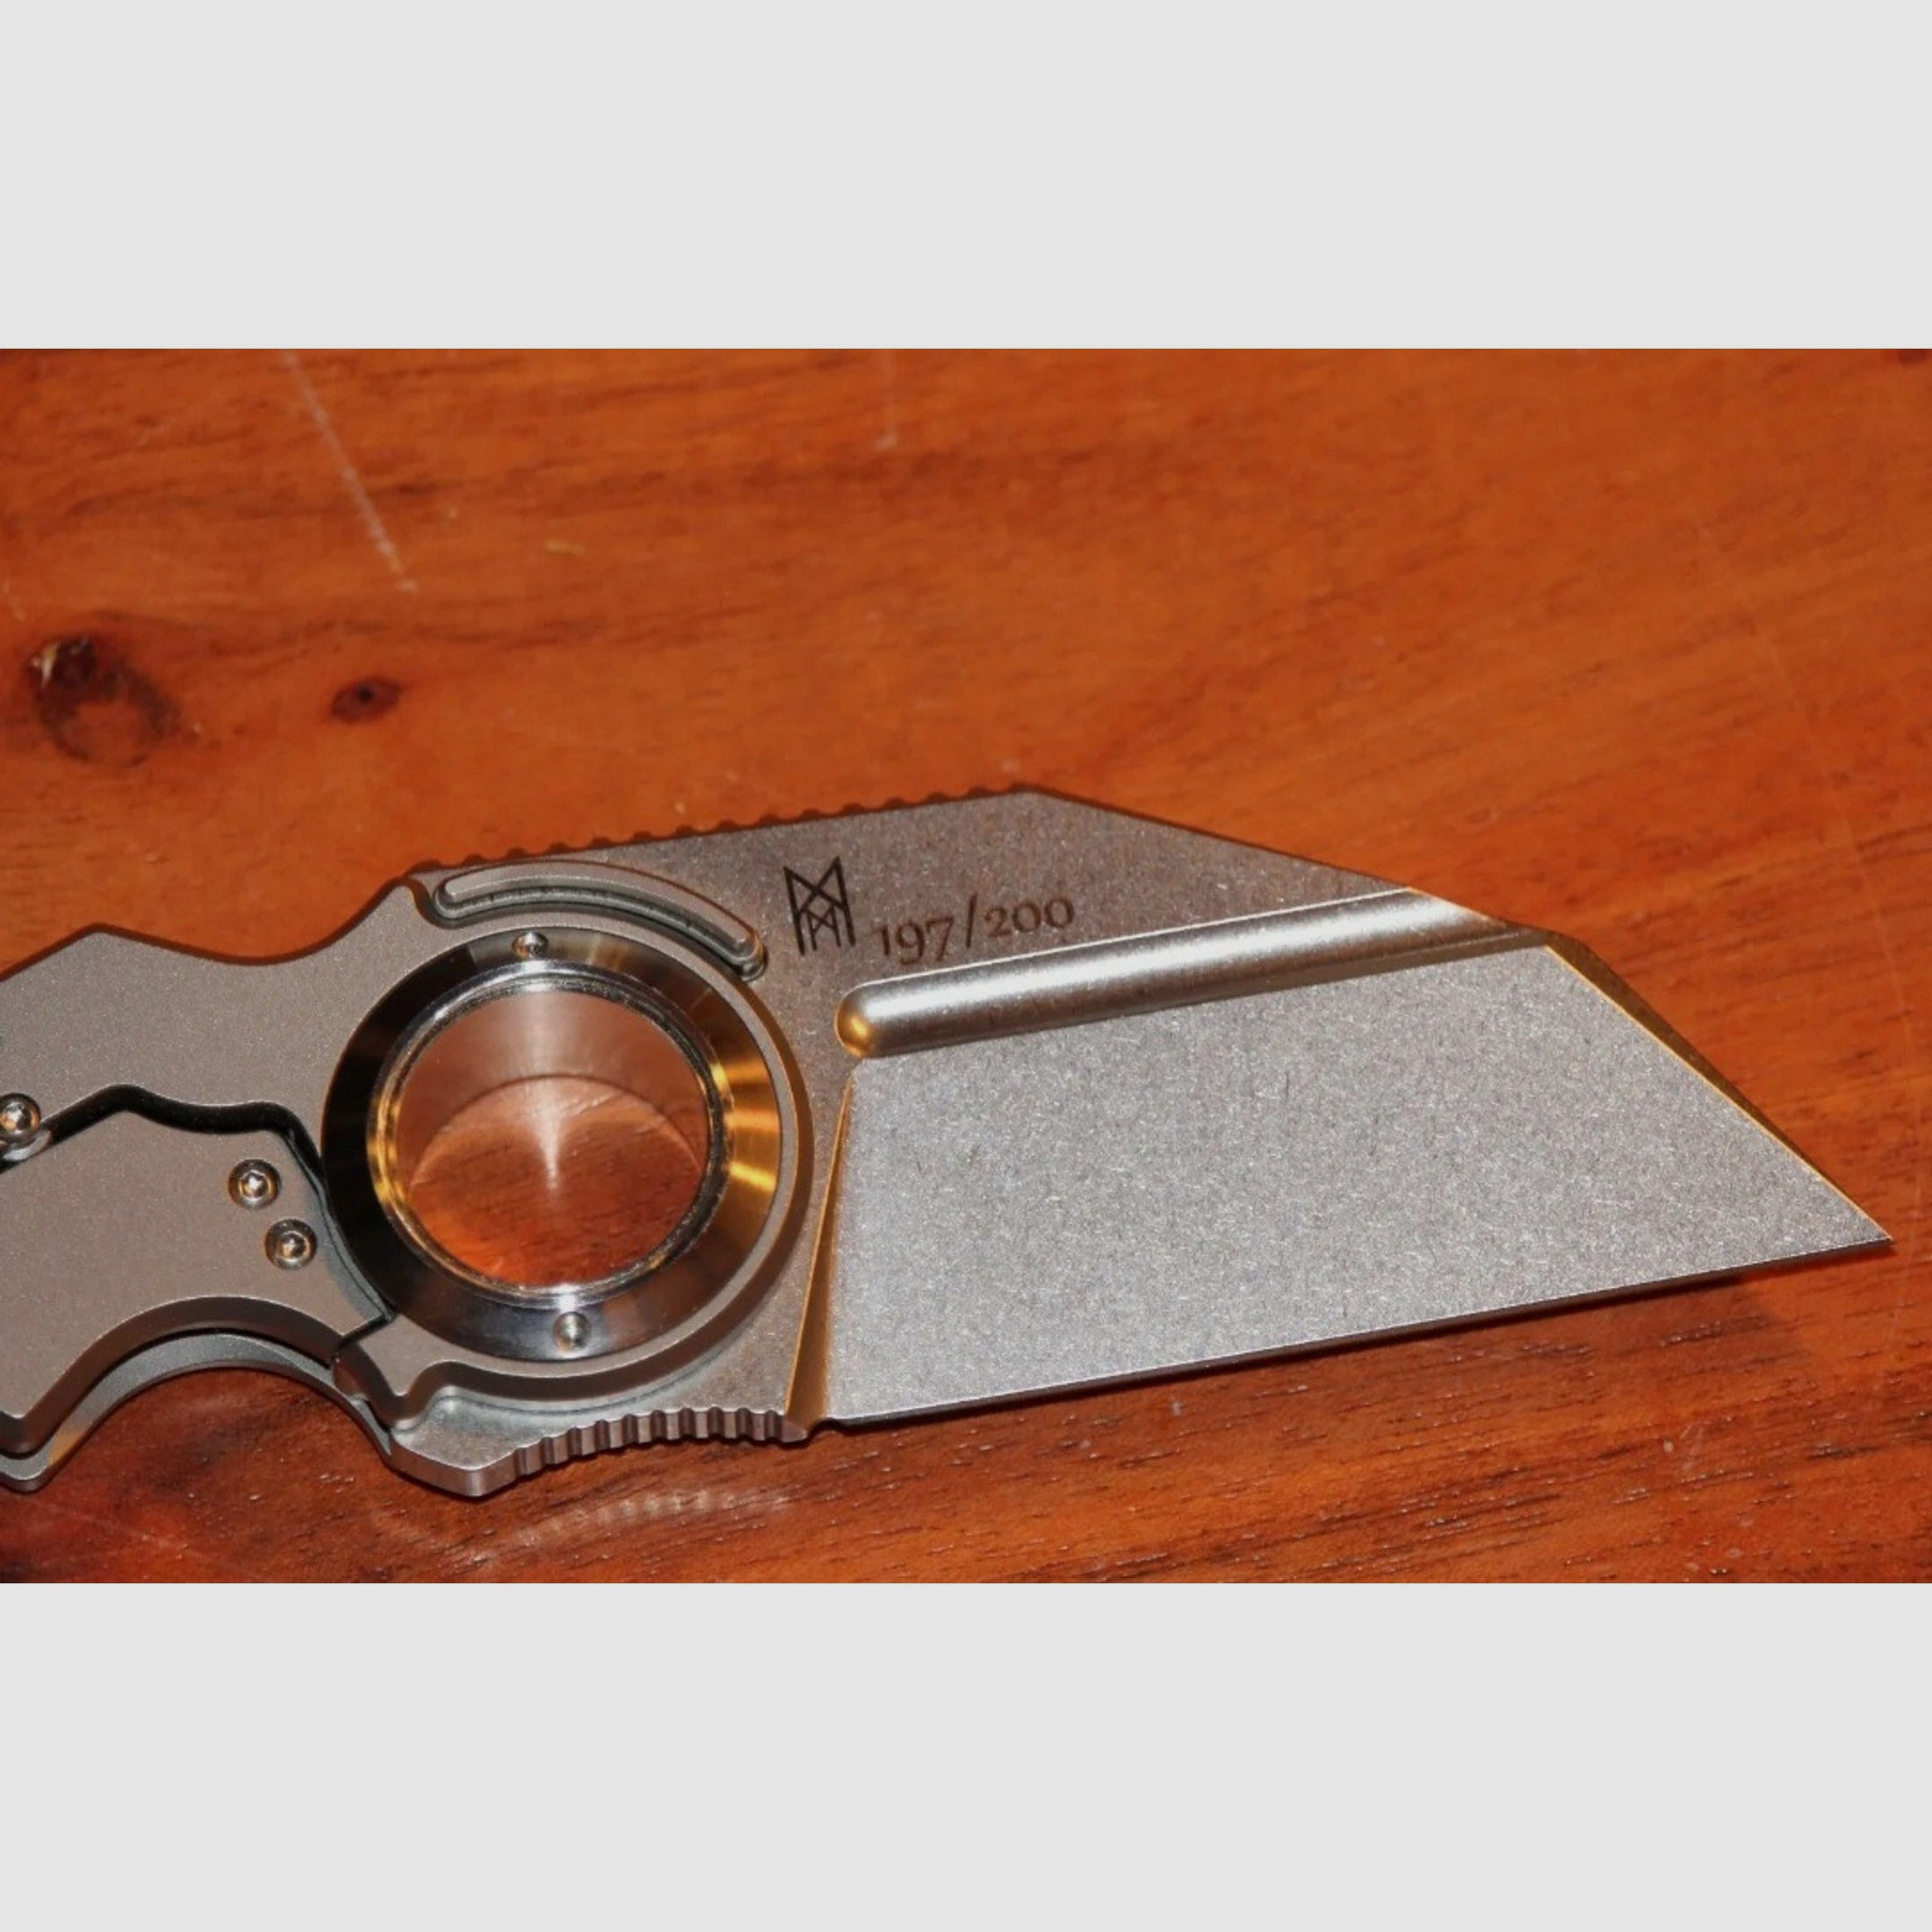 Midgards Messer Sleipnir V1 197/200, 200Stk weltweit, Sammlerstück 